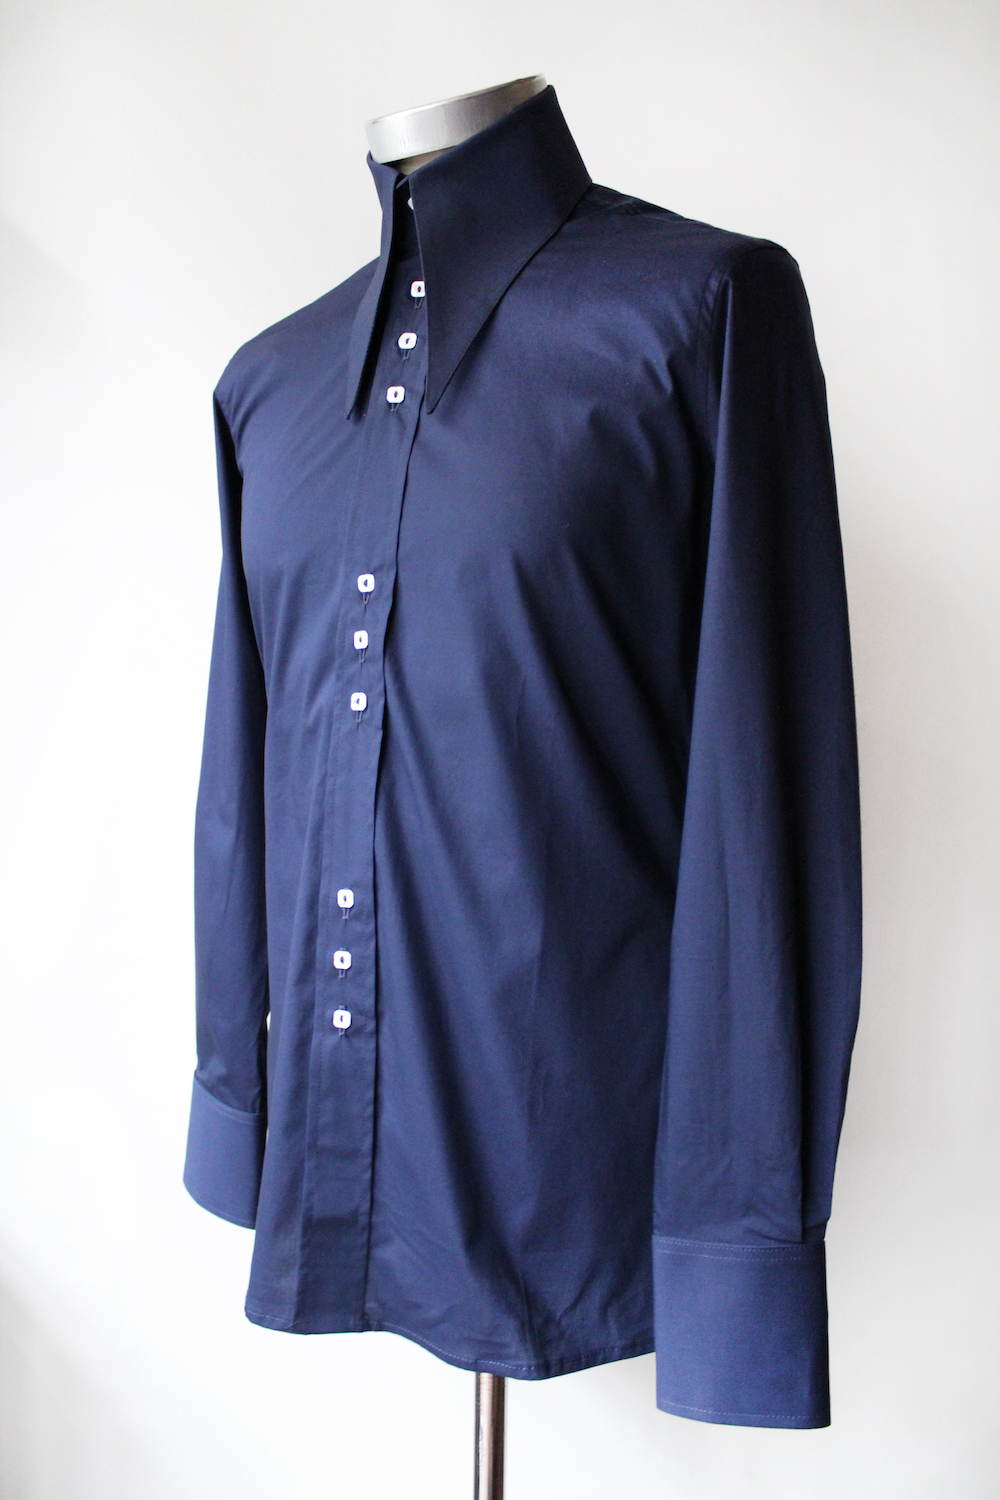 Navy blue extended spear point shirt | Mendoza Menswear